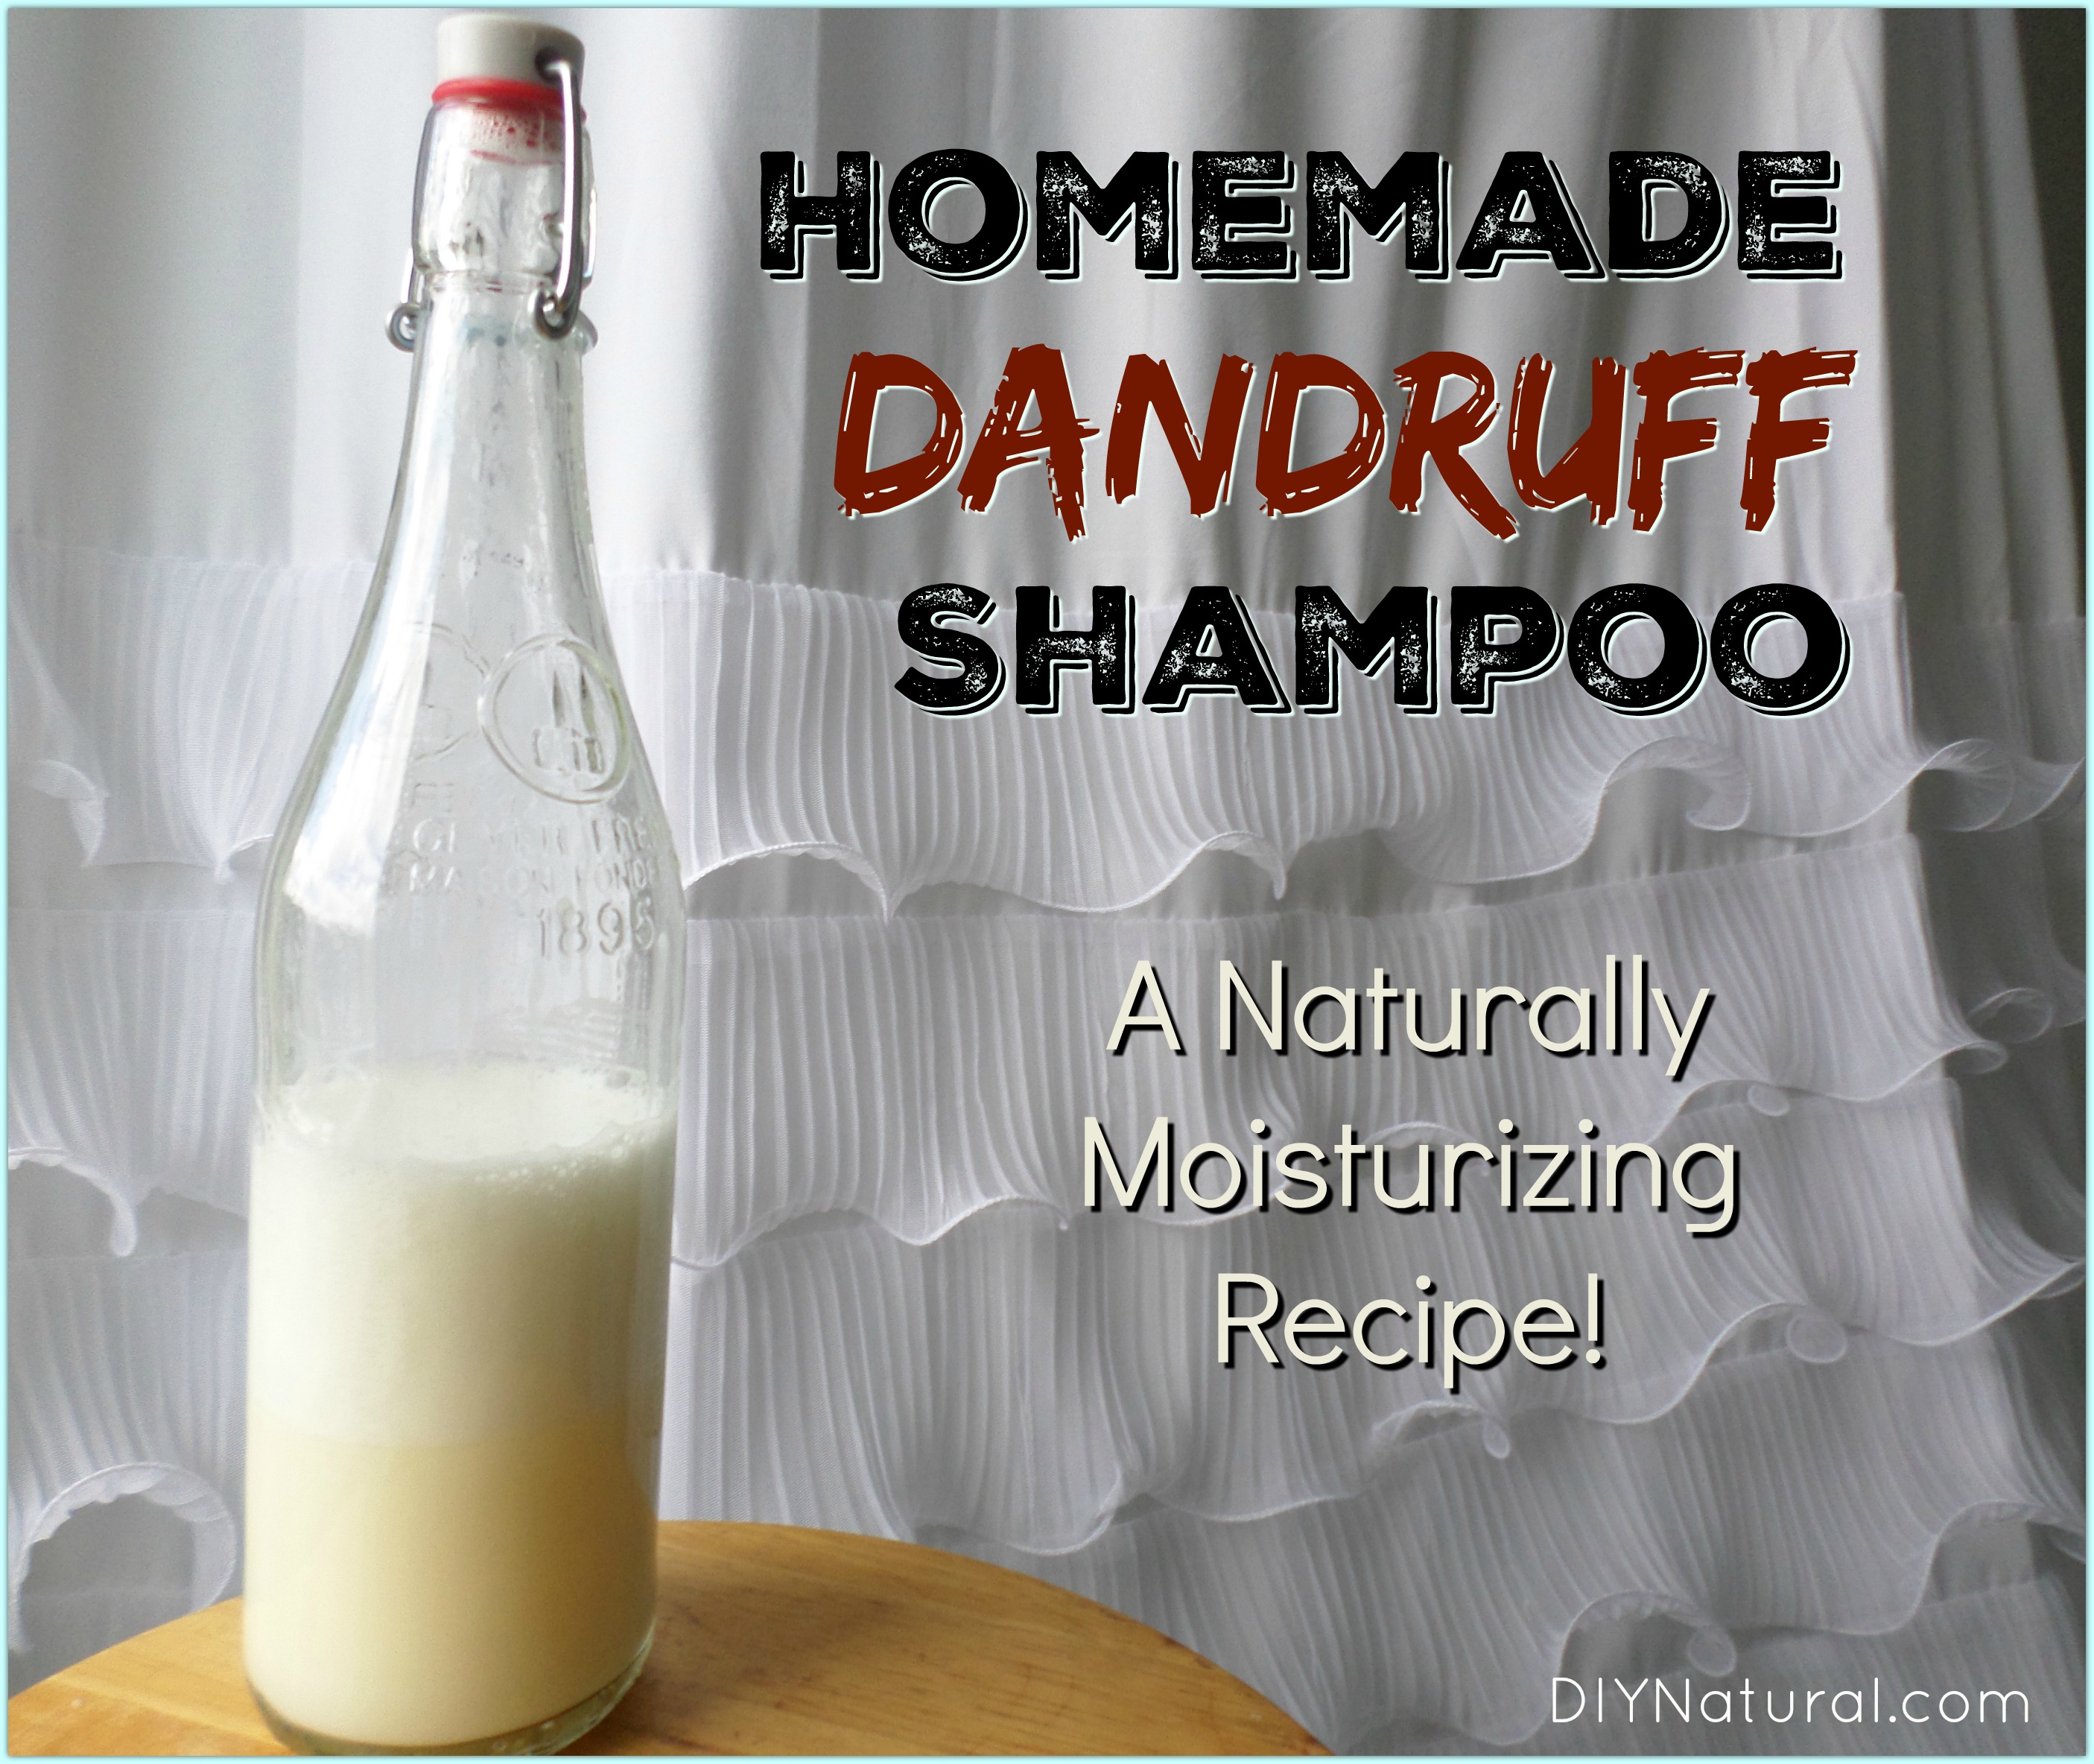 Home Remedies for Dandruff: A Homemade Dandruff Shampoo Recipe